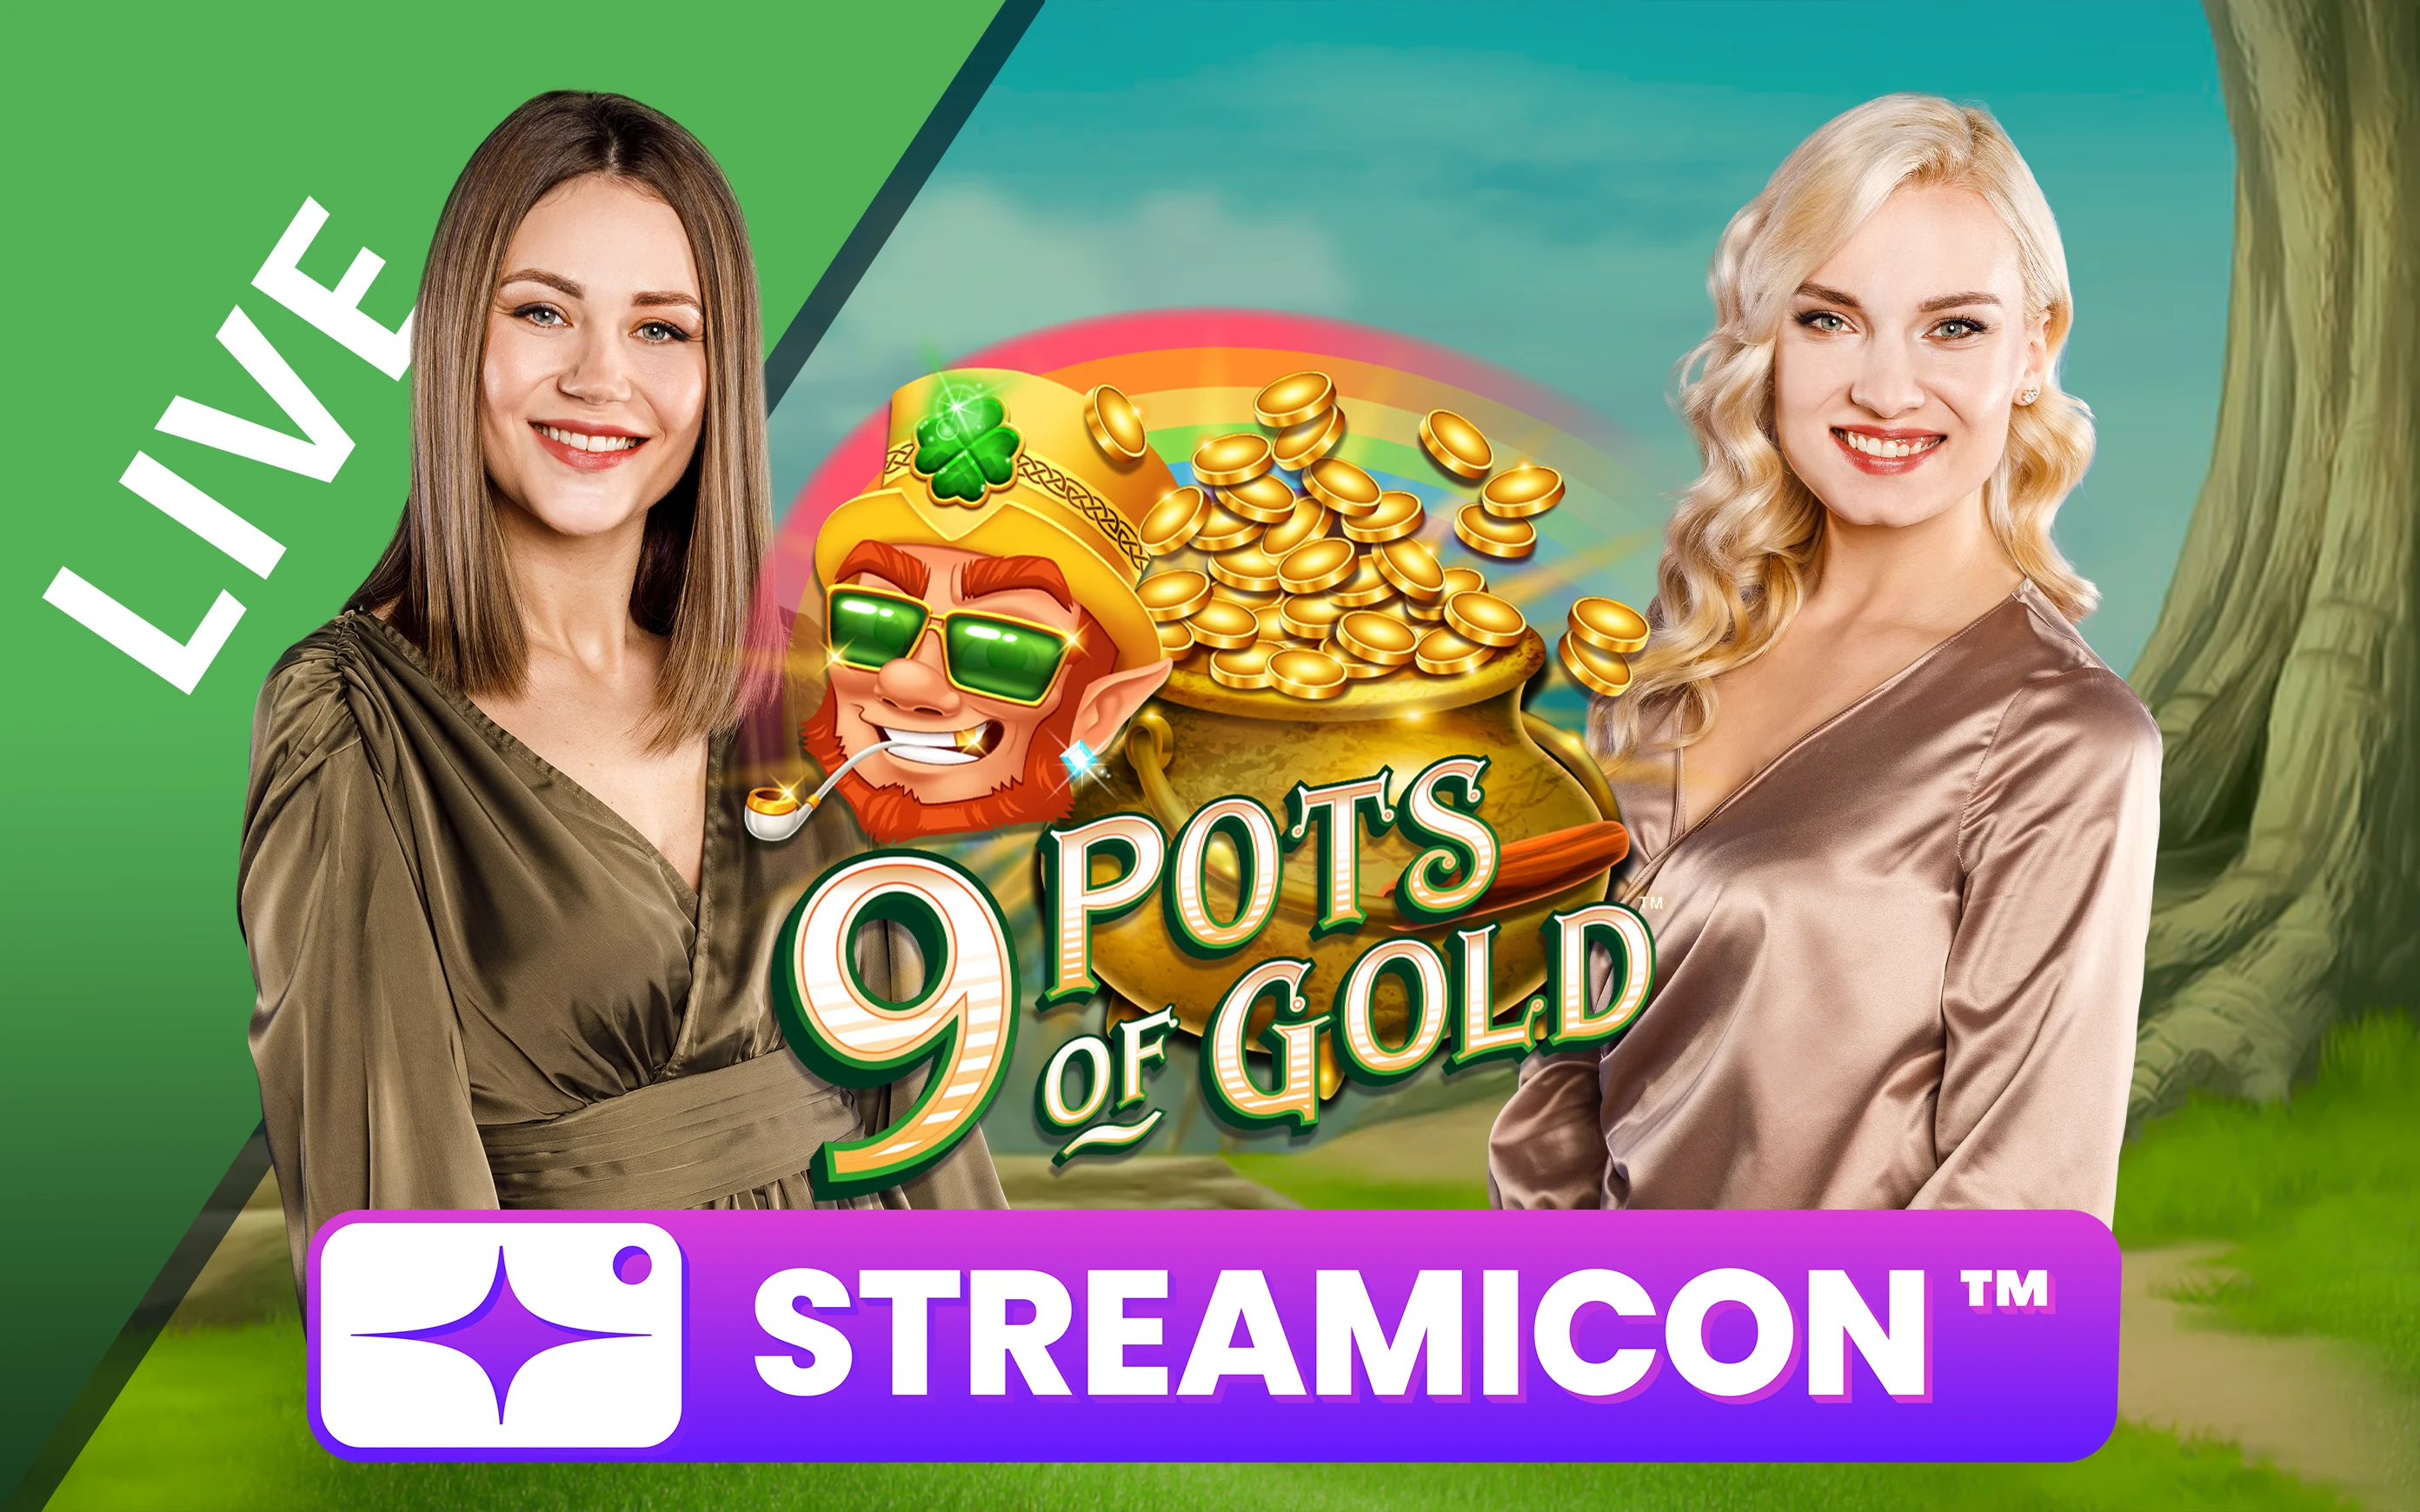 Speel 9 Pots of Gold™ Streamicon™ op Starcasino.be online casino